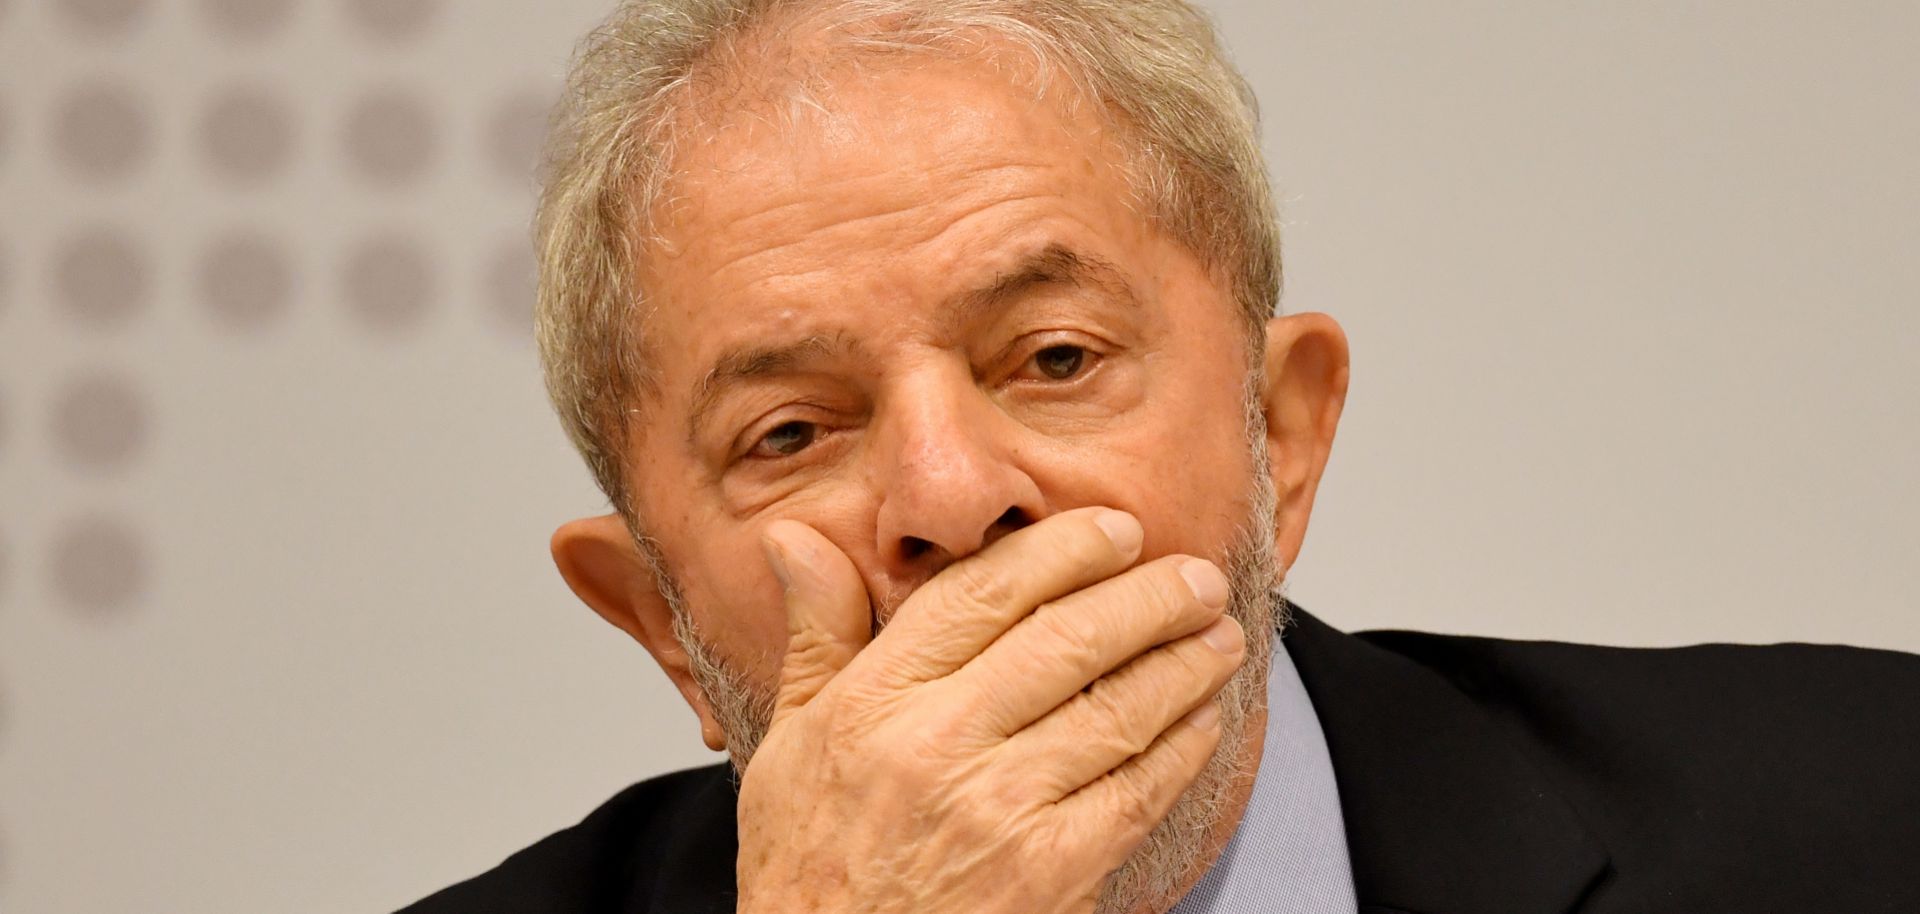 Former Brazilian president and 2018 presidential candidate Luiz Inacio Lula da Silva faces six corruption charges.